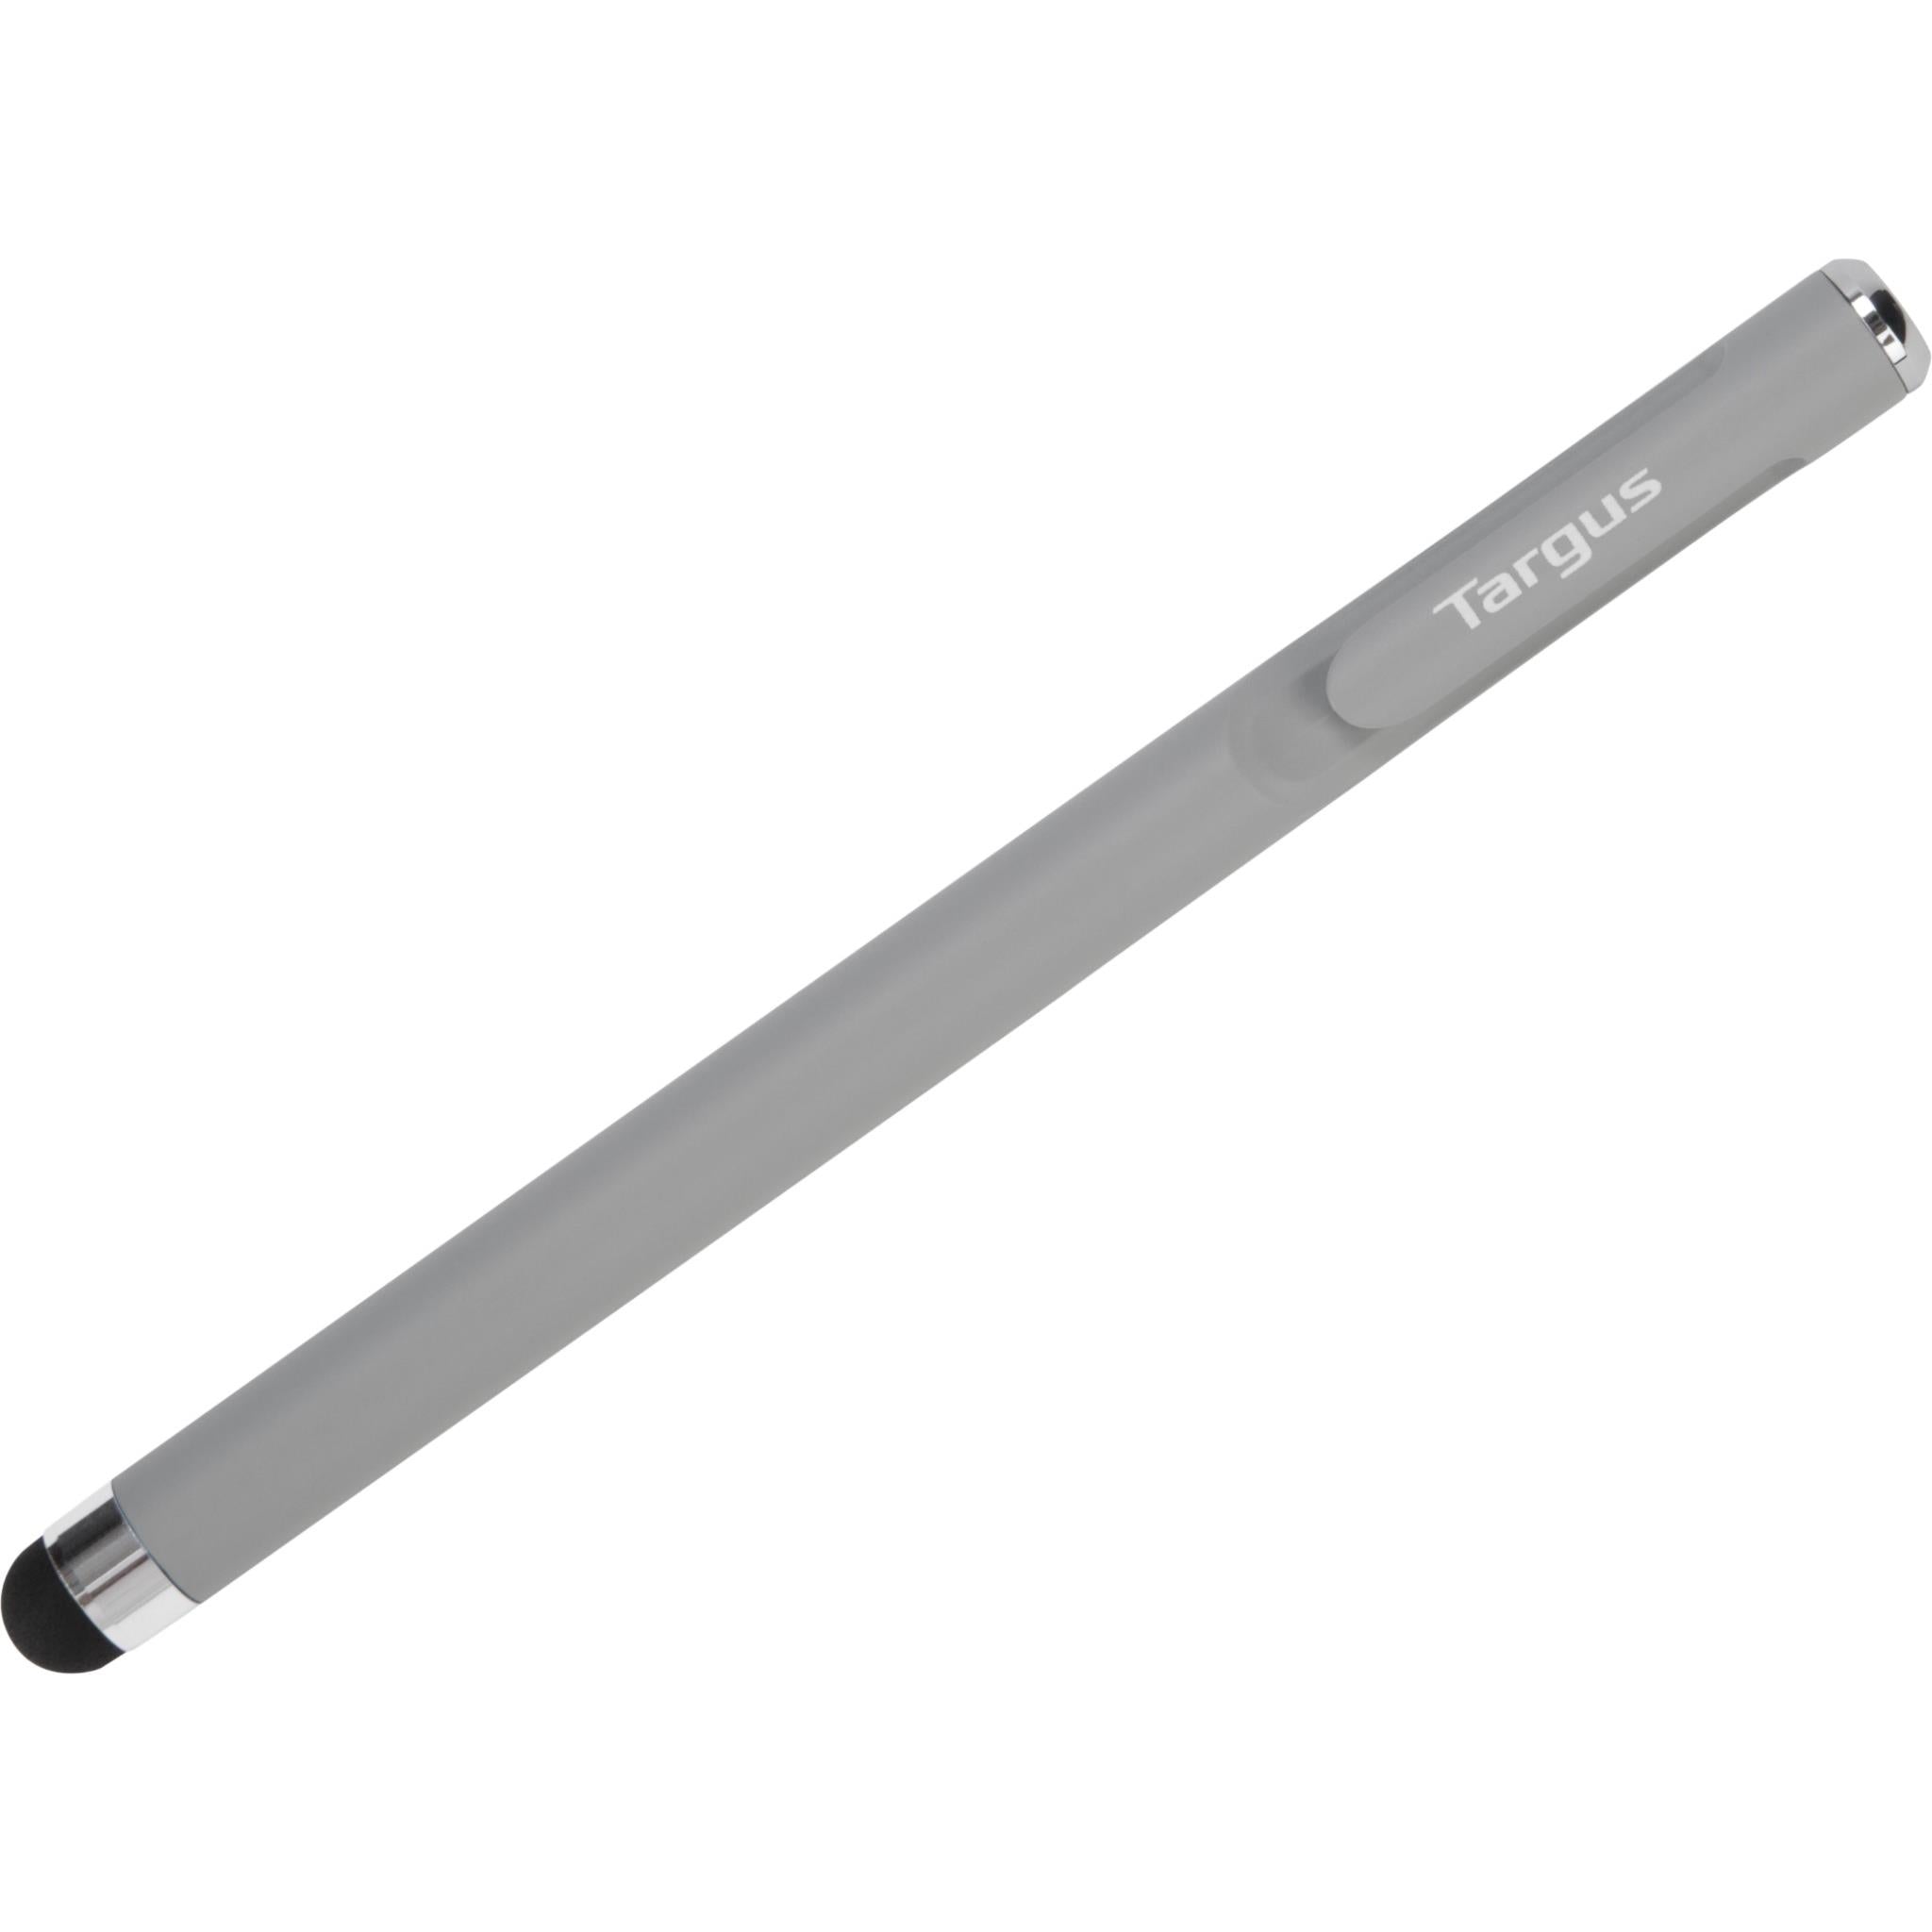 targus standard stylus with embedded clip (grey)